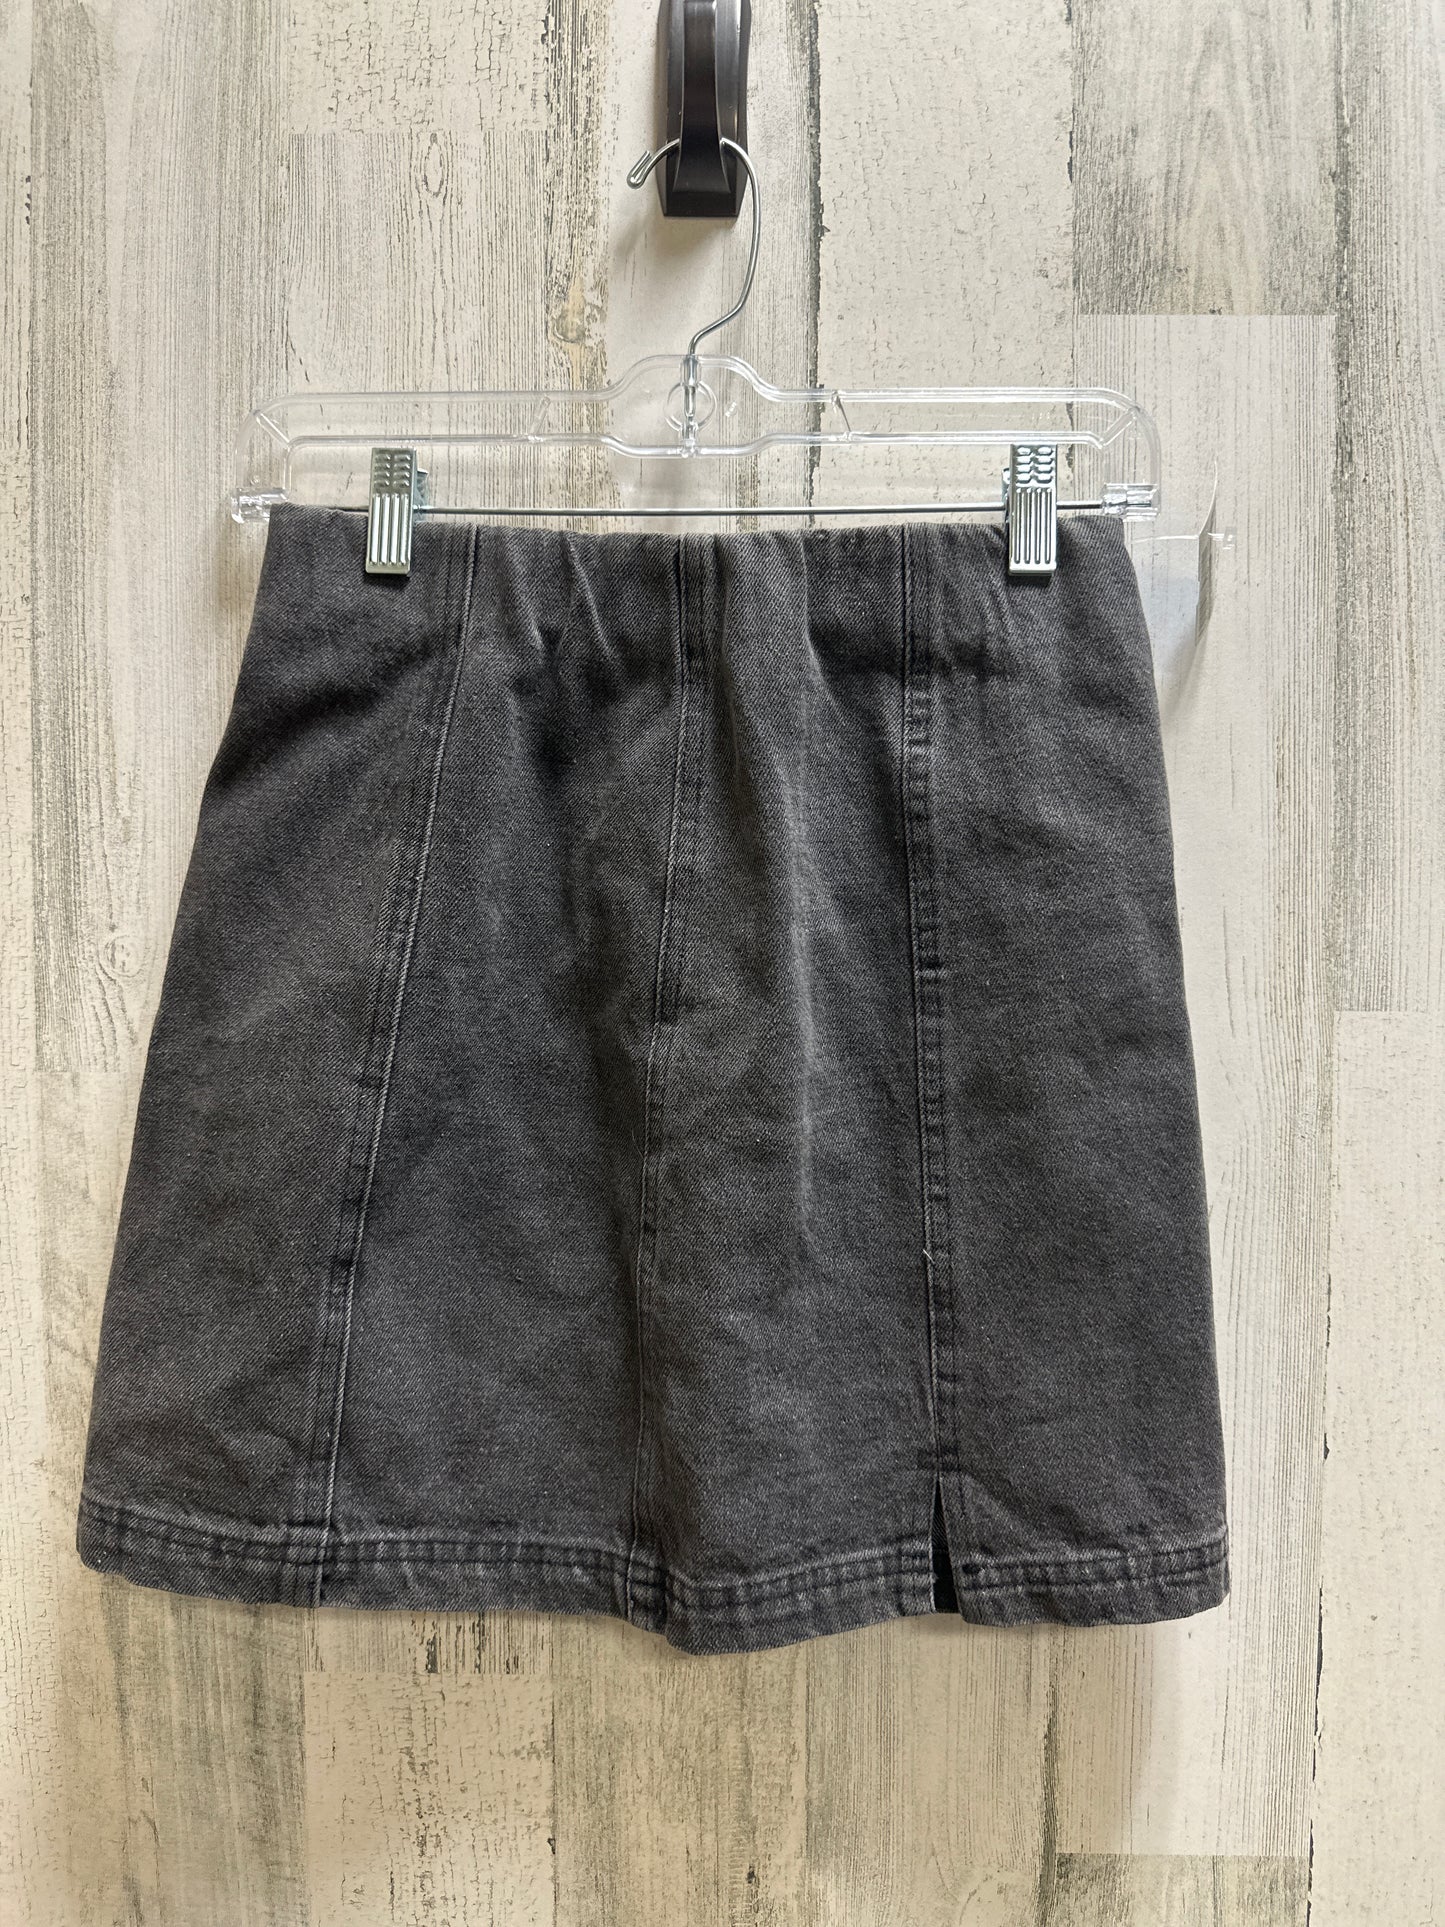 Skirt Mini & Short By Loveriche  Size: S